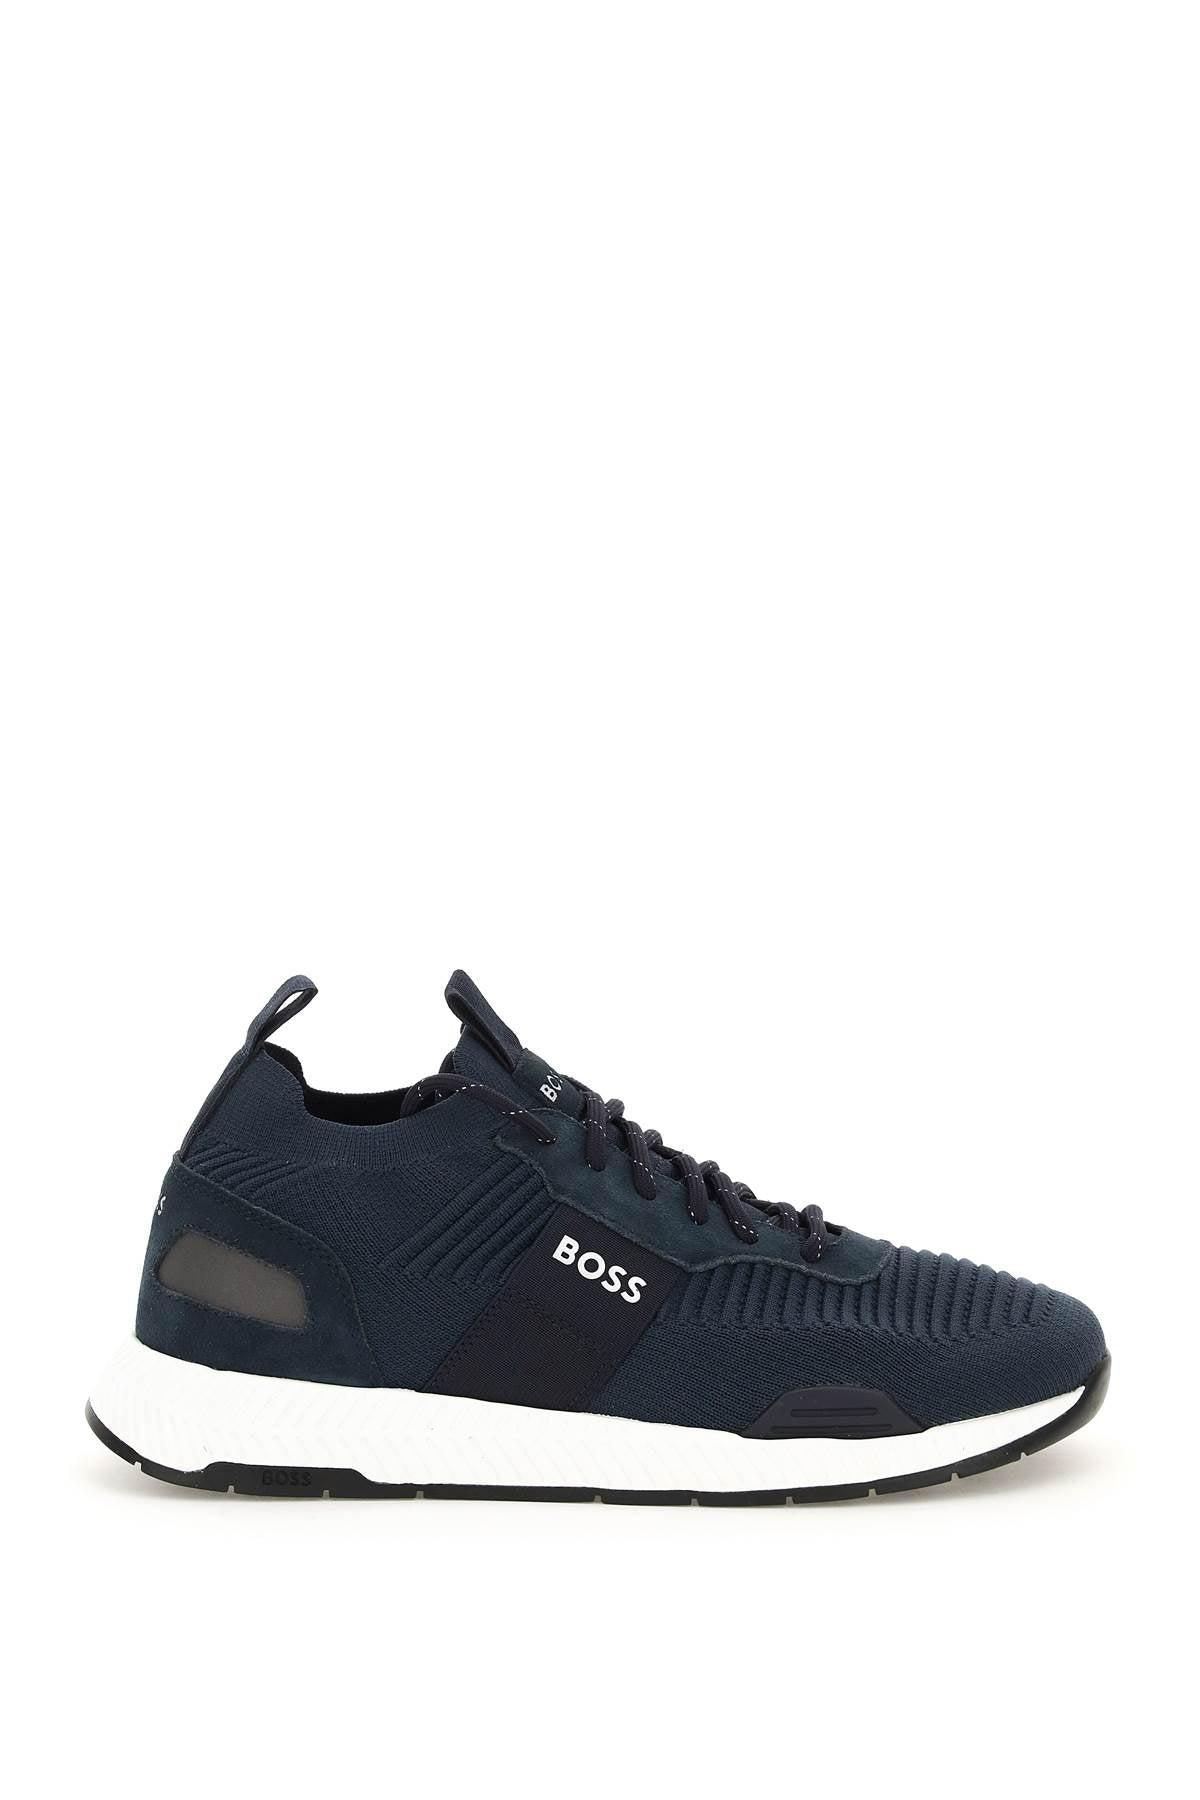 BOSS by HUGO BOSS Repreve Knit Sock Sneakers in Dark Blue (Blue) for Men |  Lyst